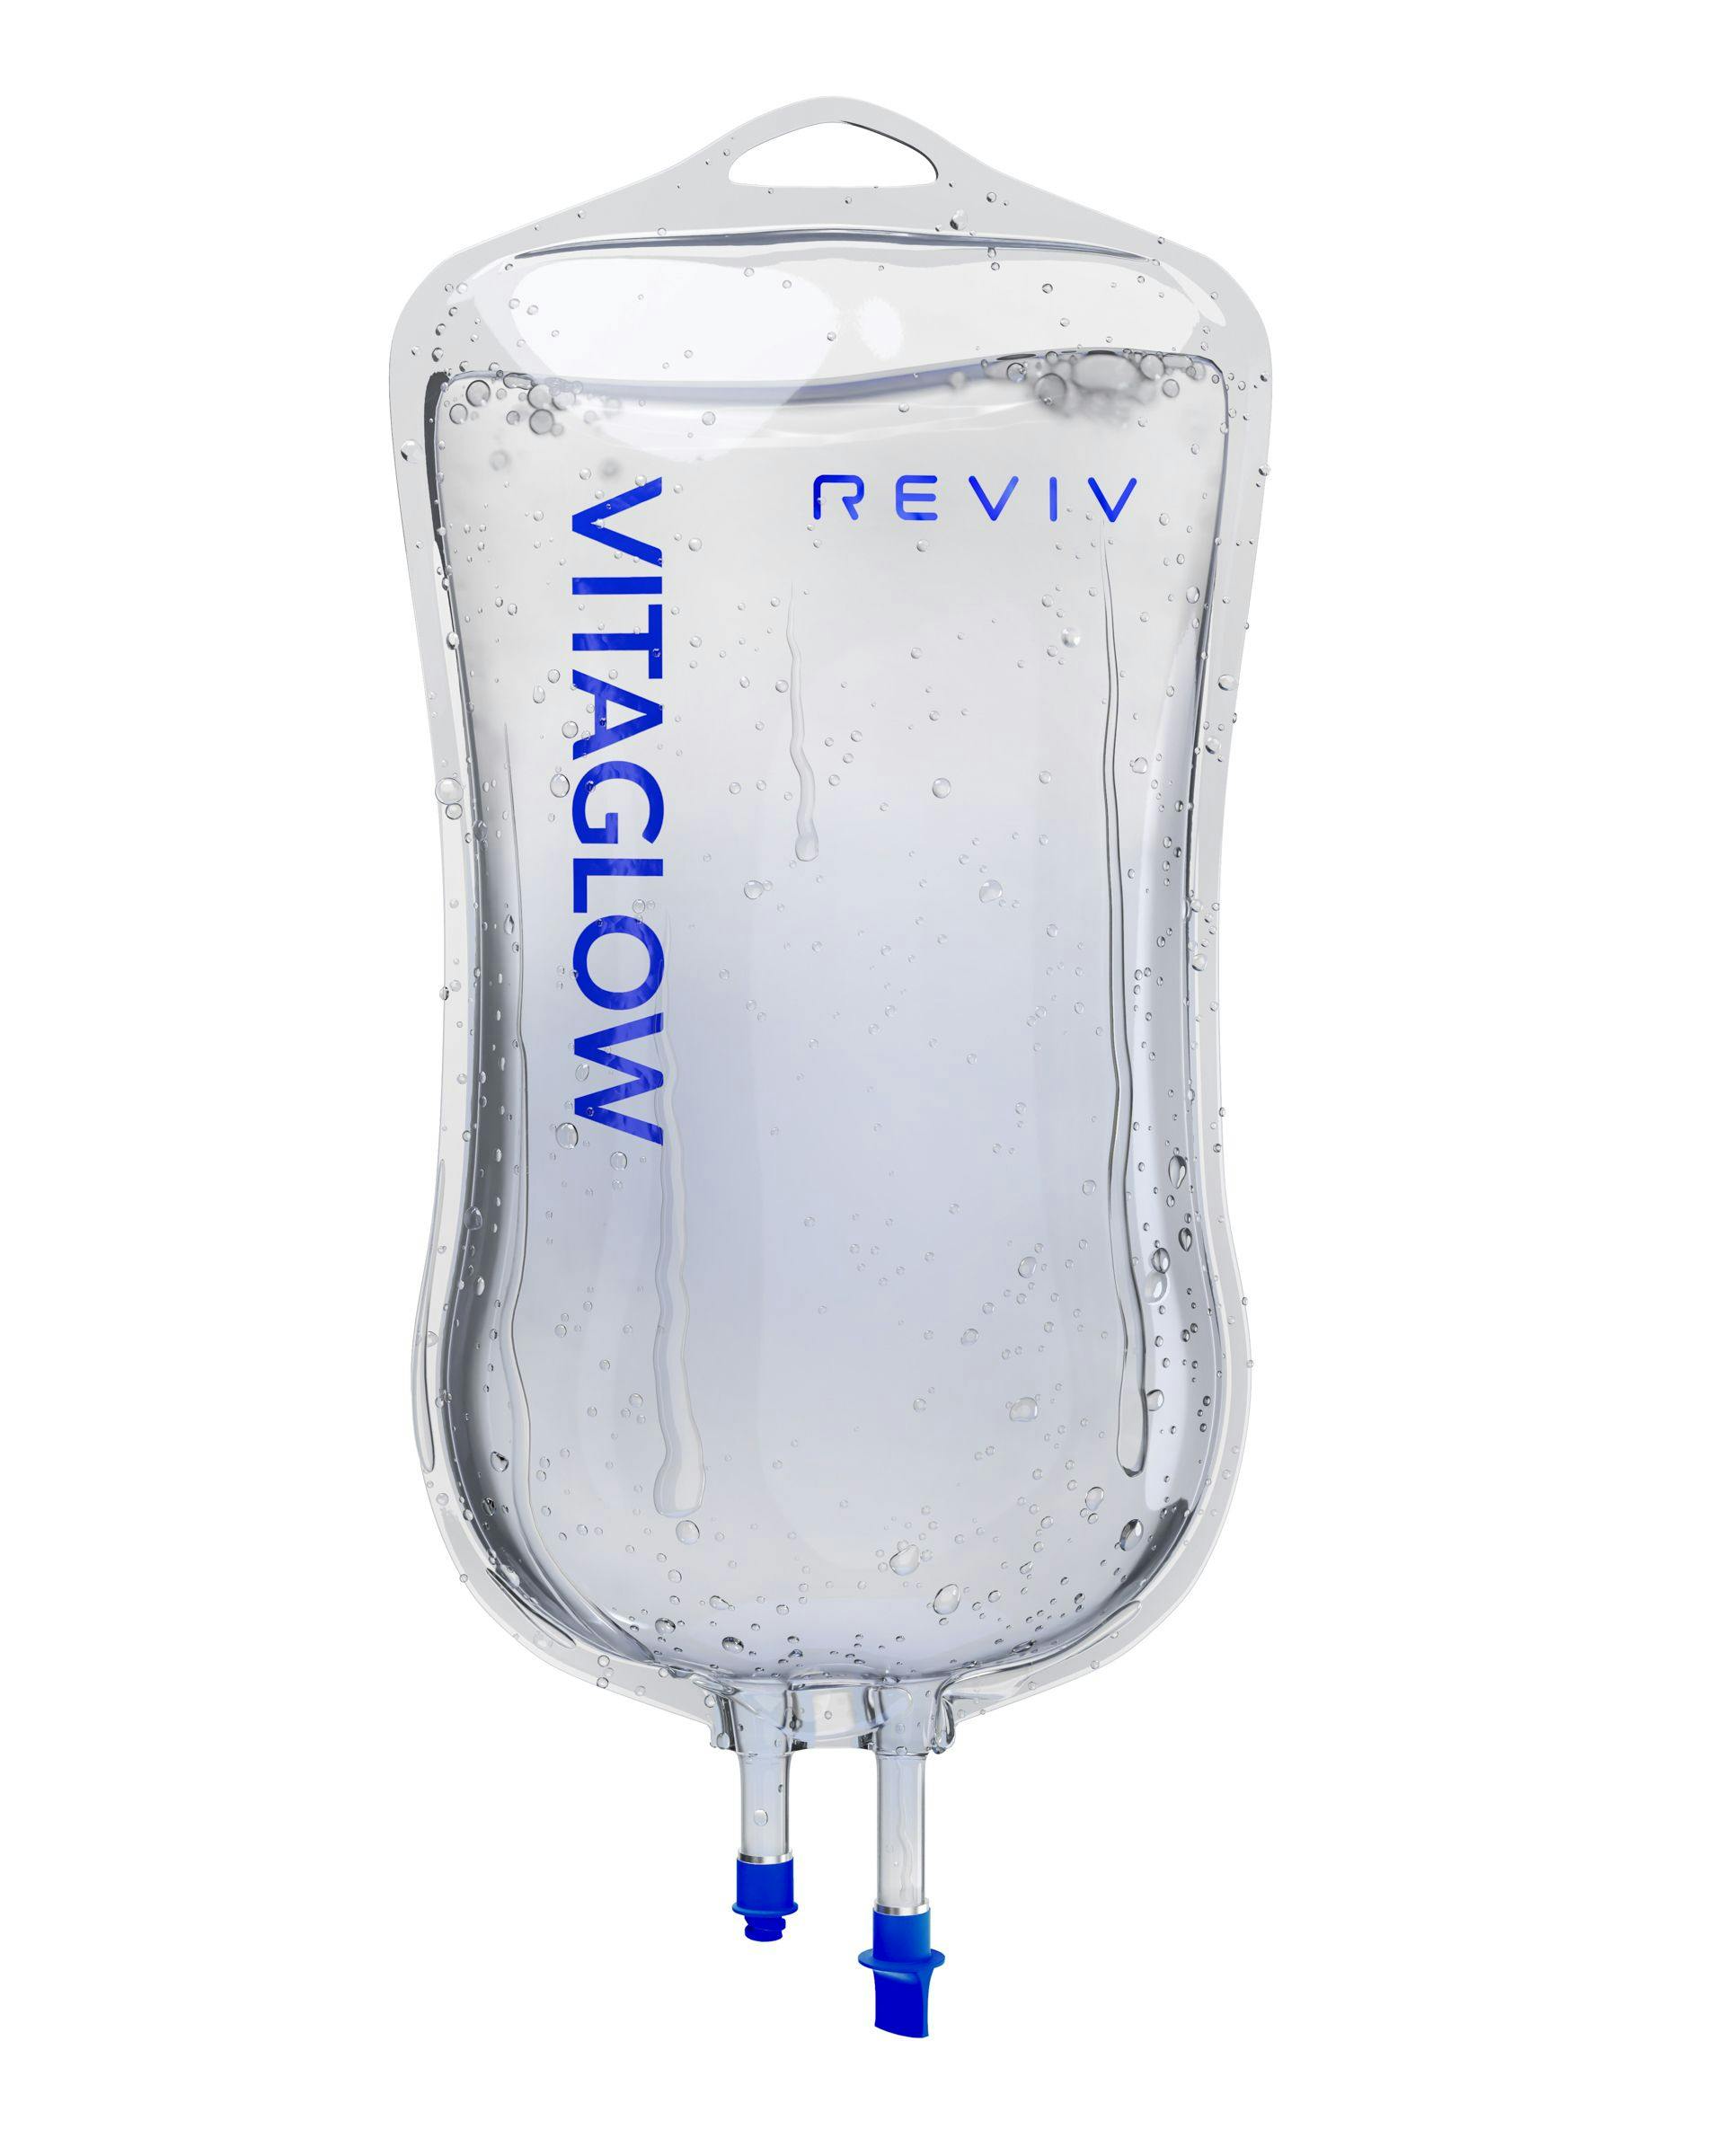 REVIV IV Bag Front Vitaglow